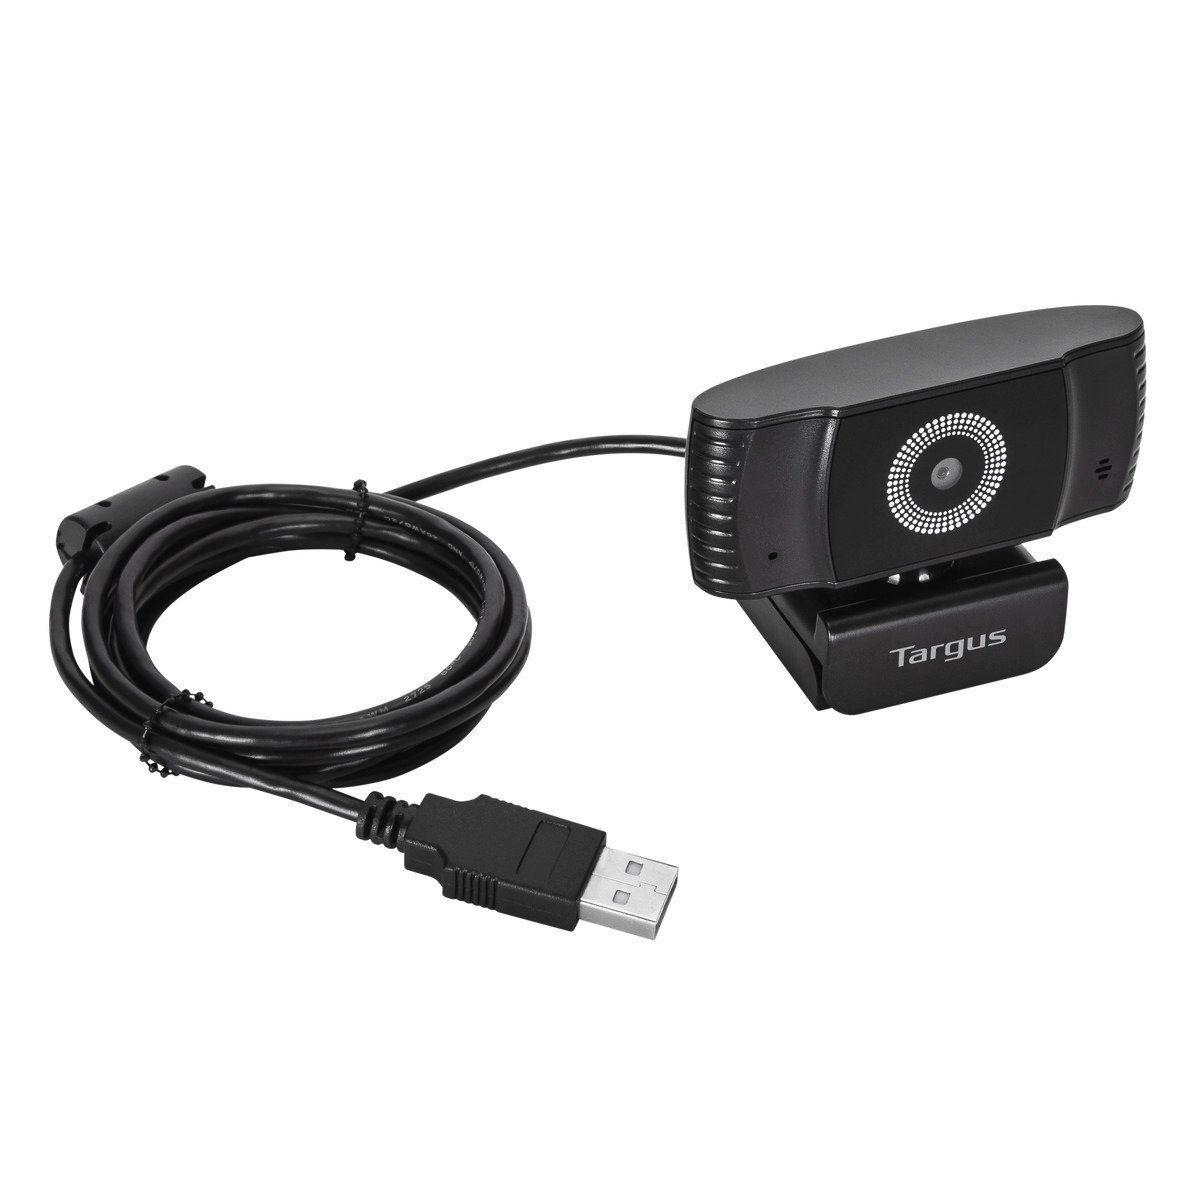 Targus Webcam Plus Full HD Autofokus Webcam mit Webcam